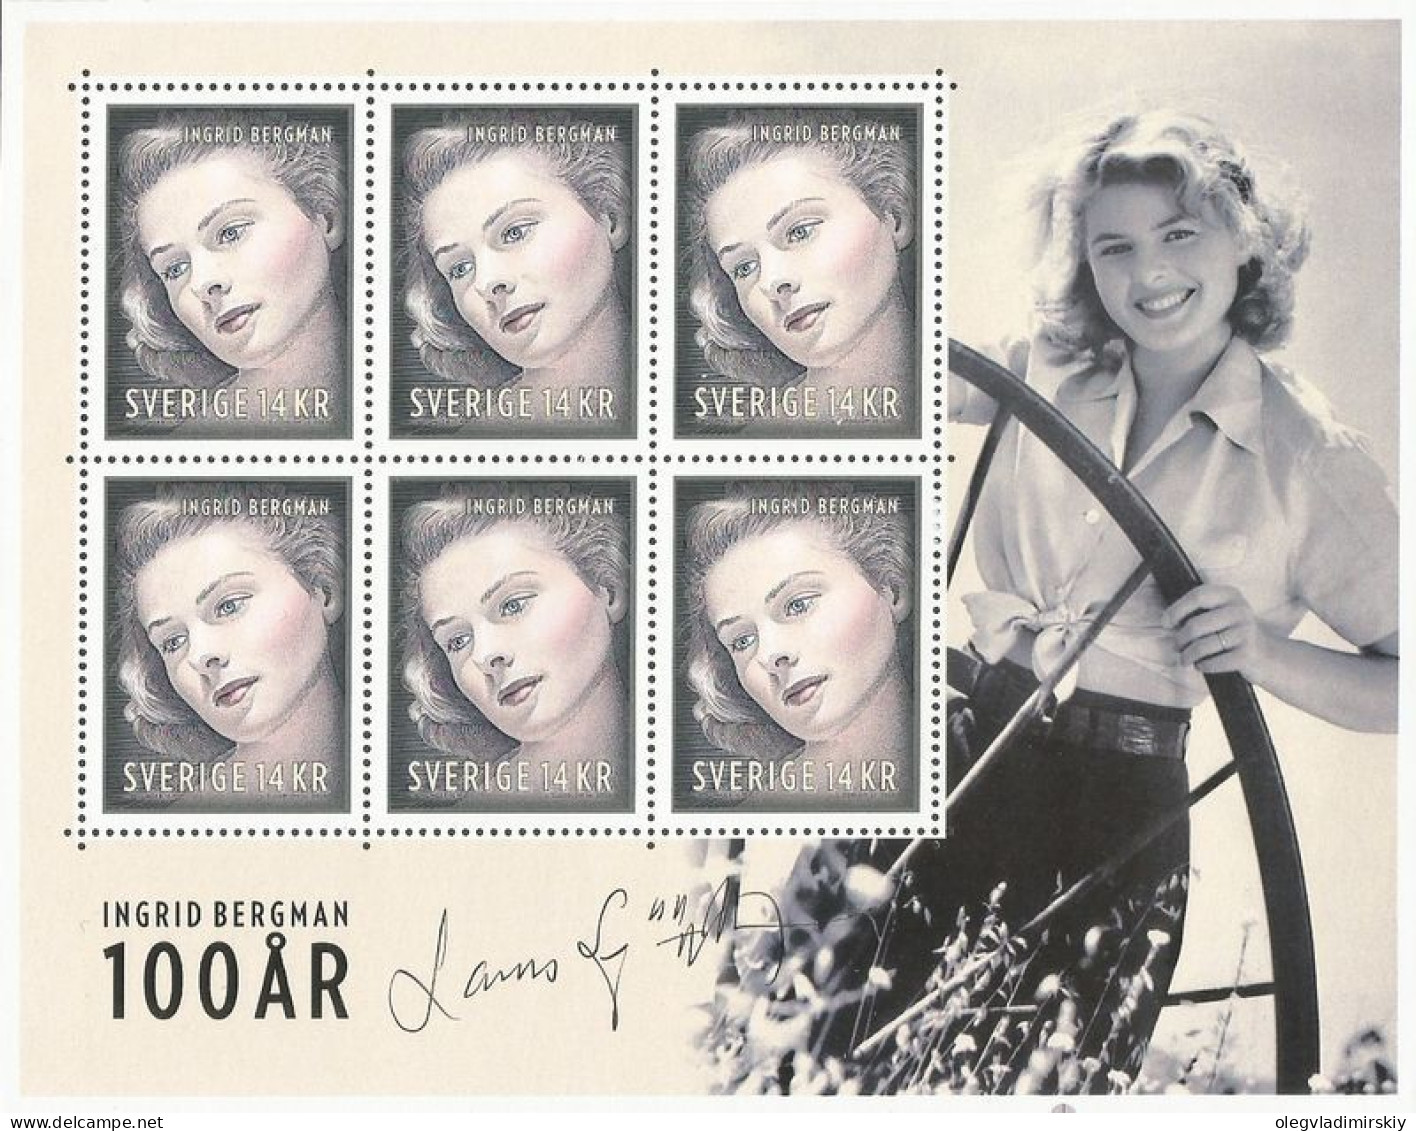 Sweden Schweden Suède 2015 Ingrid Bergman 100 Ann Joint Issue With USA Special Limited Edtion Sheetlet MNH - Blocks & Kleinbögen